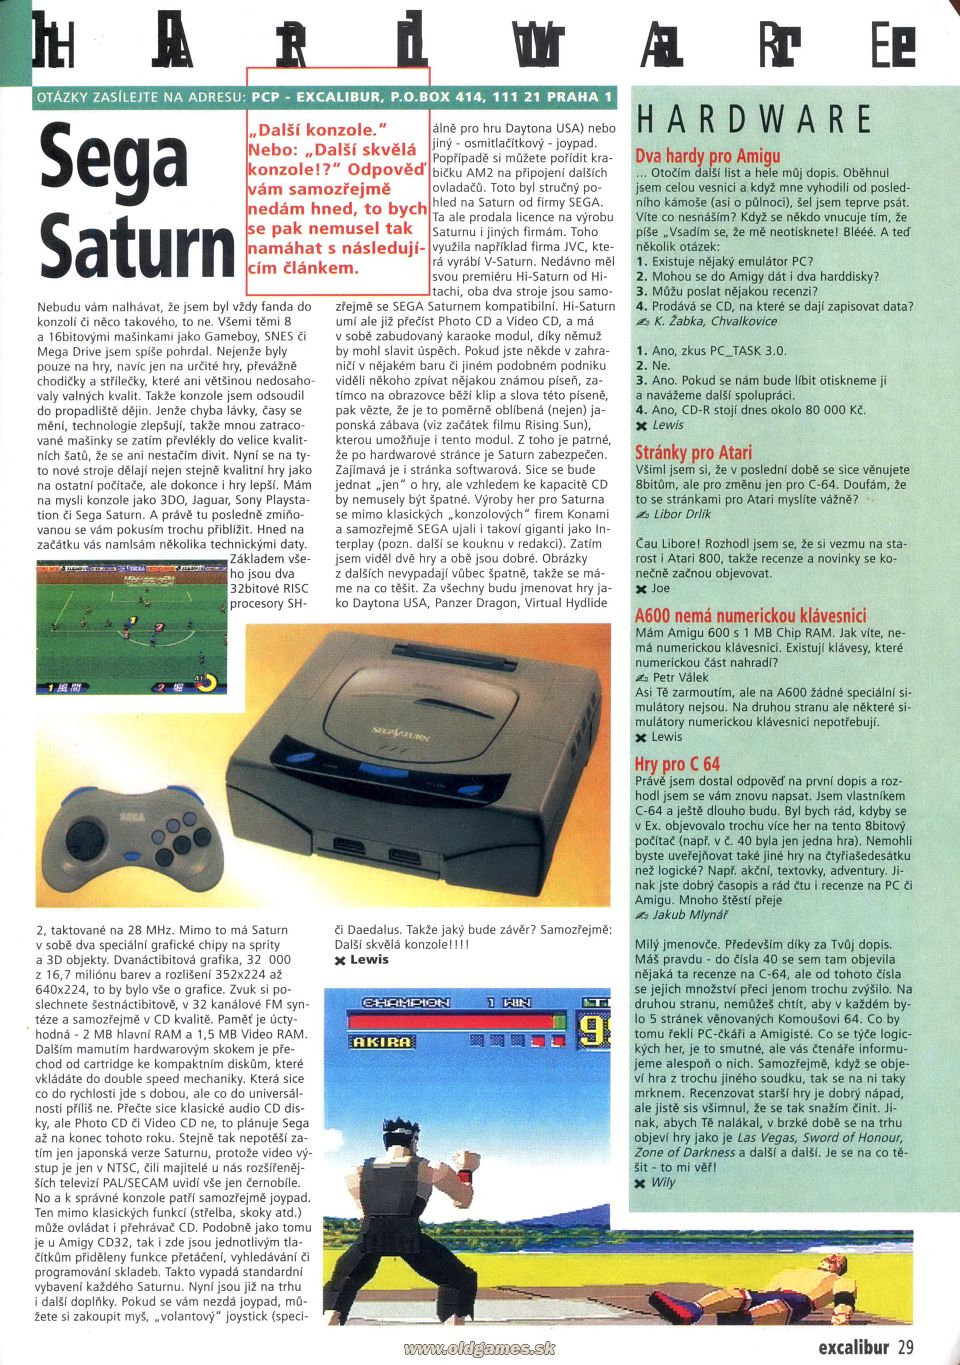 Hardware: Sega Saturn